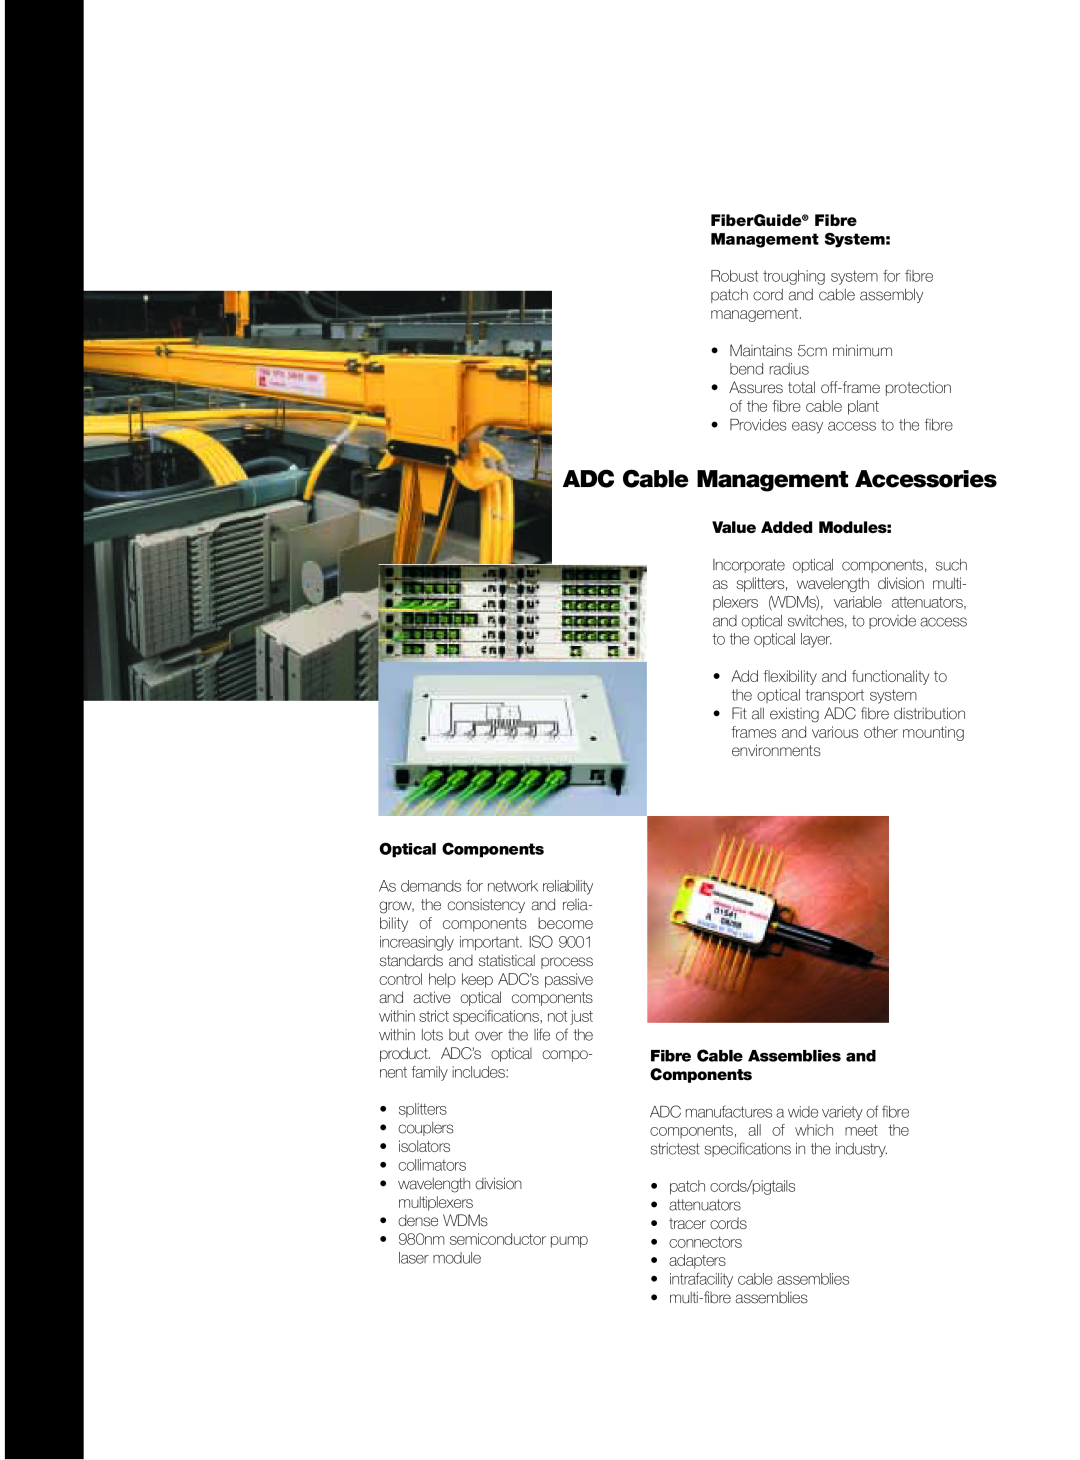 ADC Fibre ETSI Solution manual FiberGuide Fibre Management System, Value Added Modules, Optical Components 